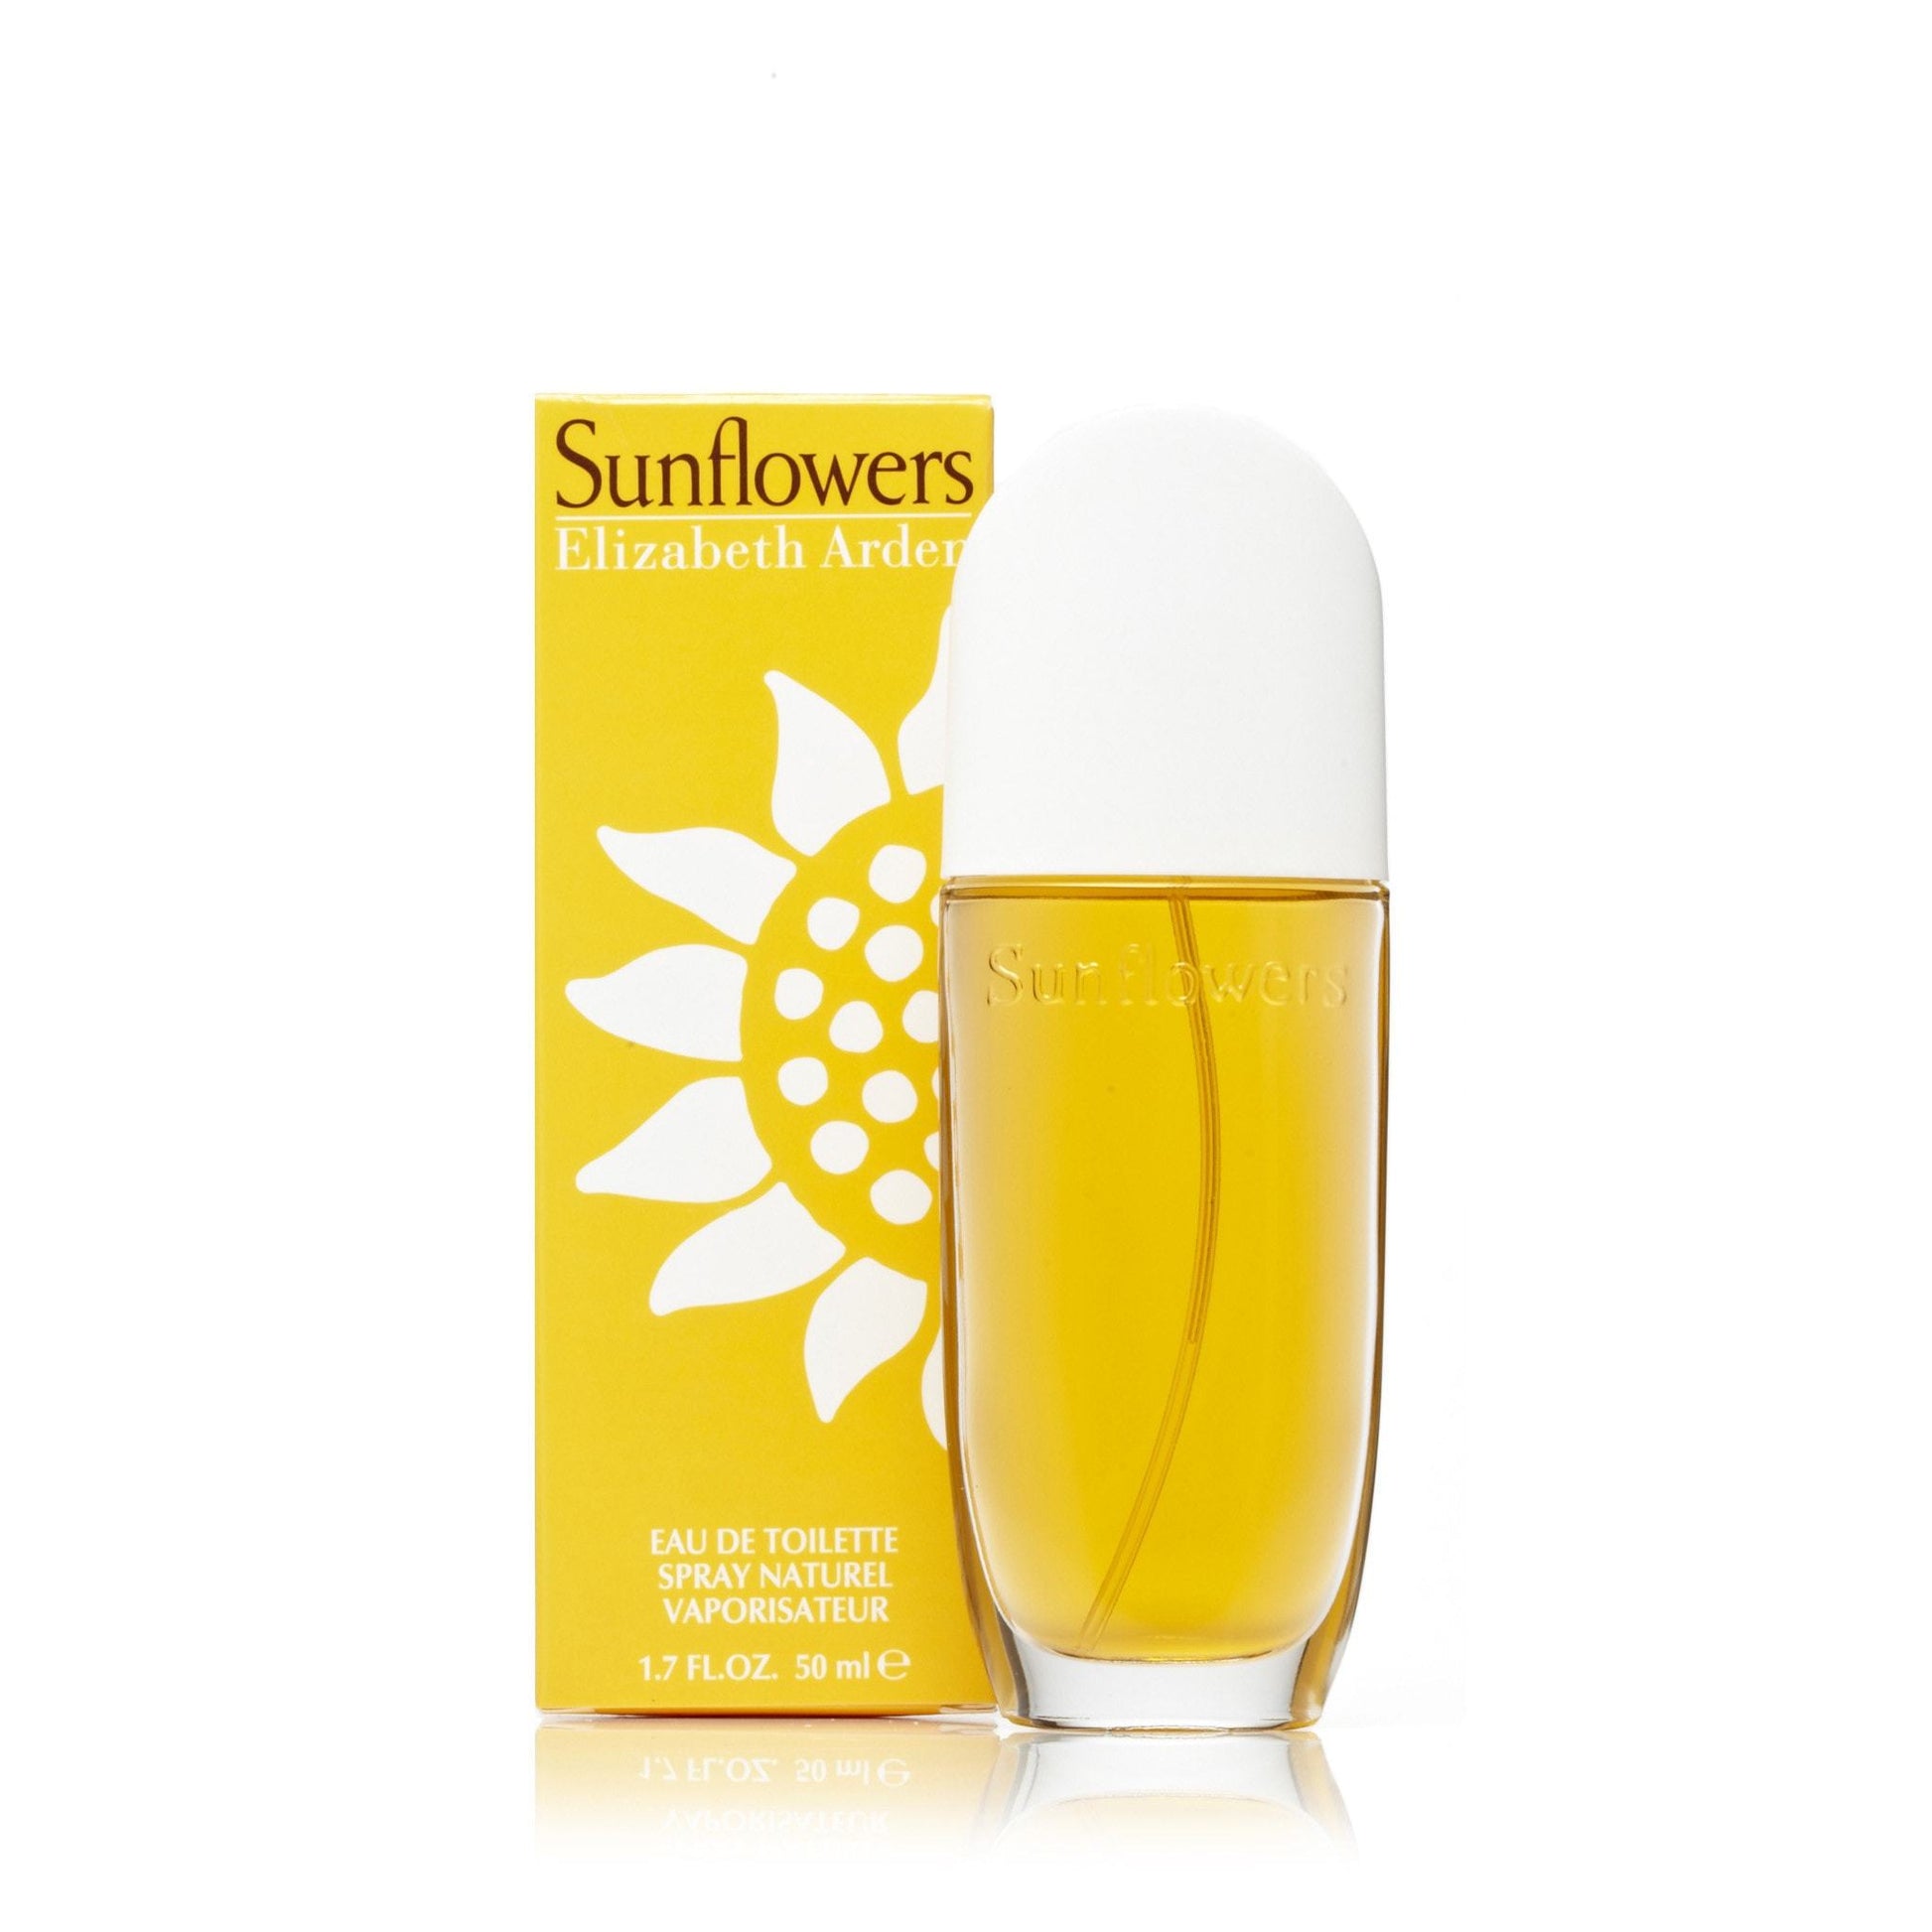 Sunflowers Eau de Toilette Spray for Women by Elizabeth Arden, Product image 6